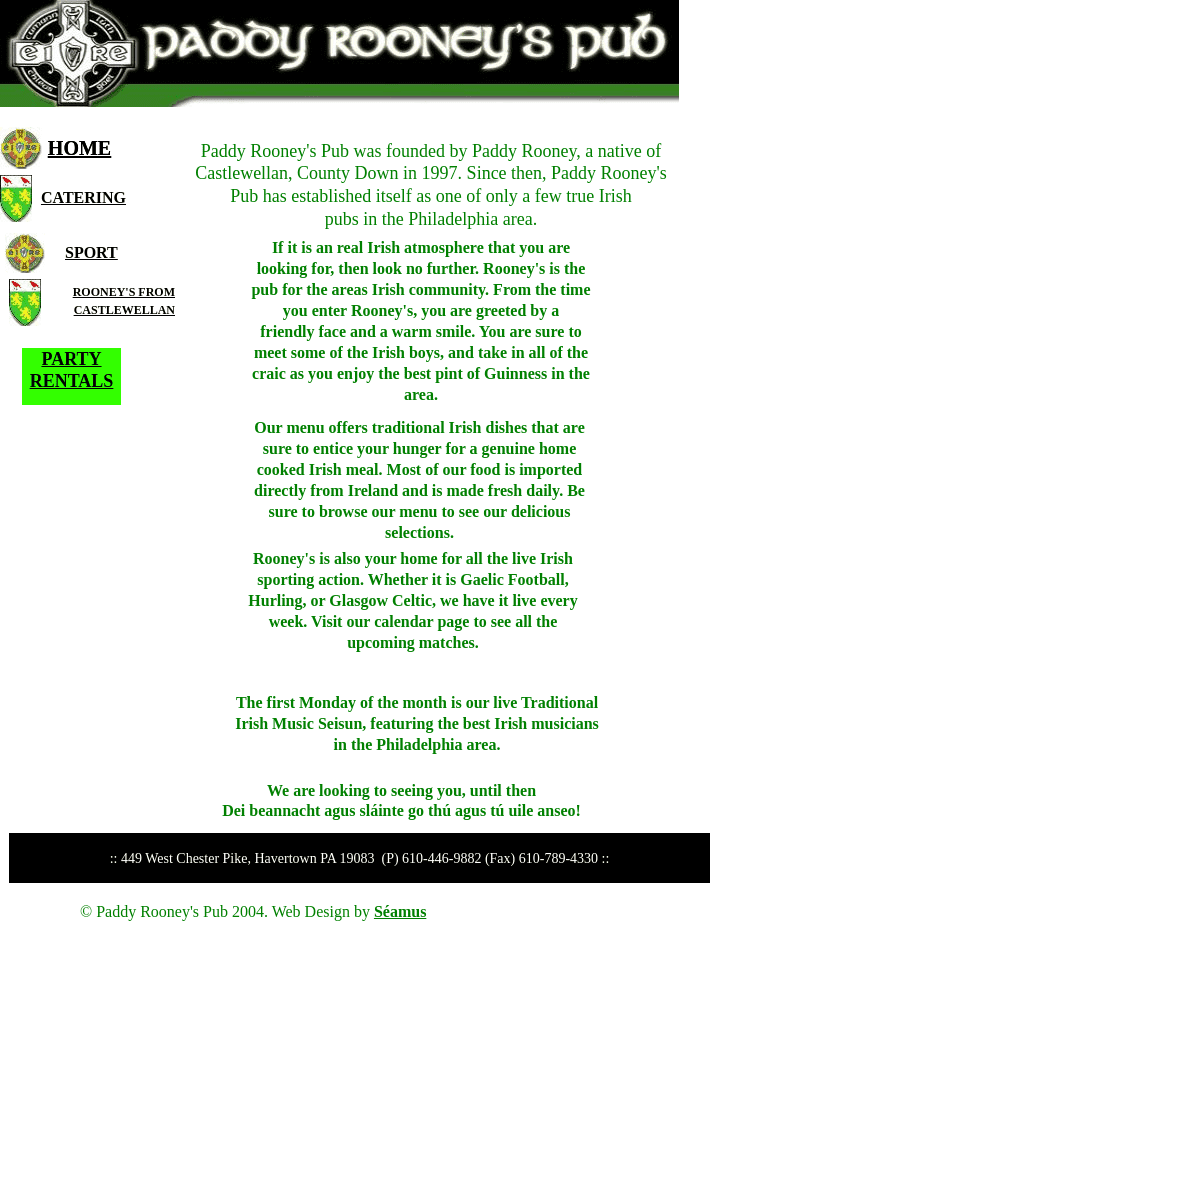 A complete backup of http://paddyrooneyspub.com/